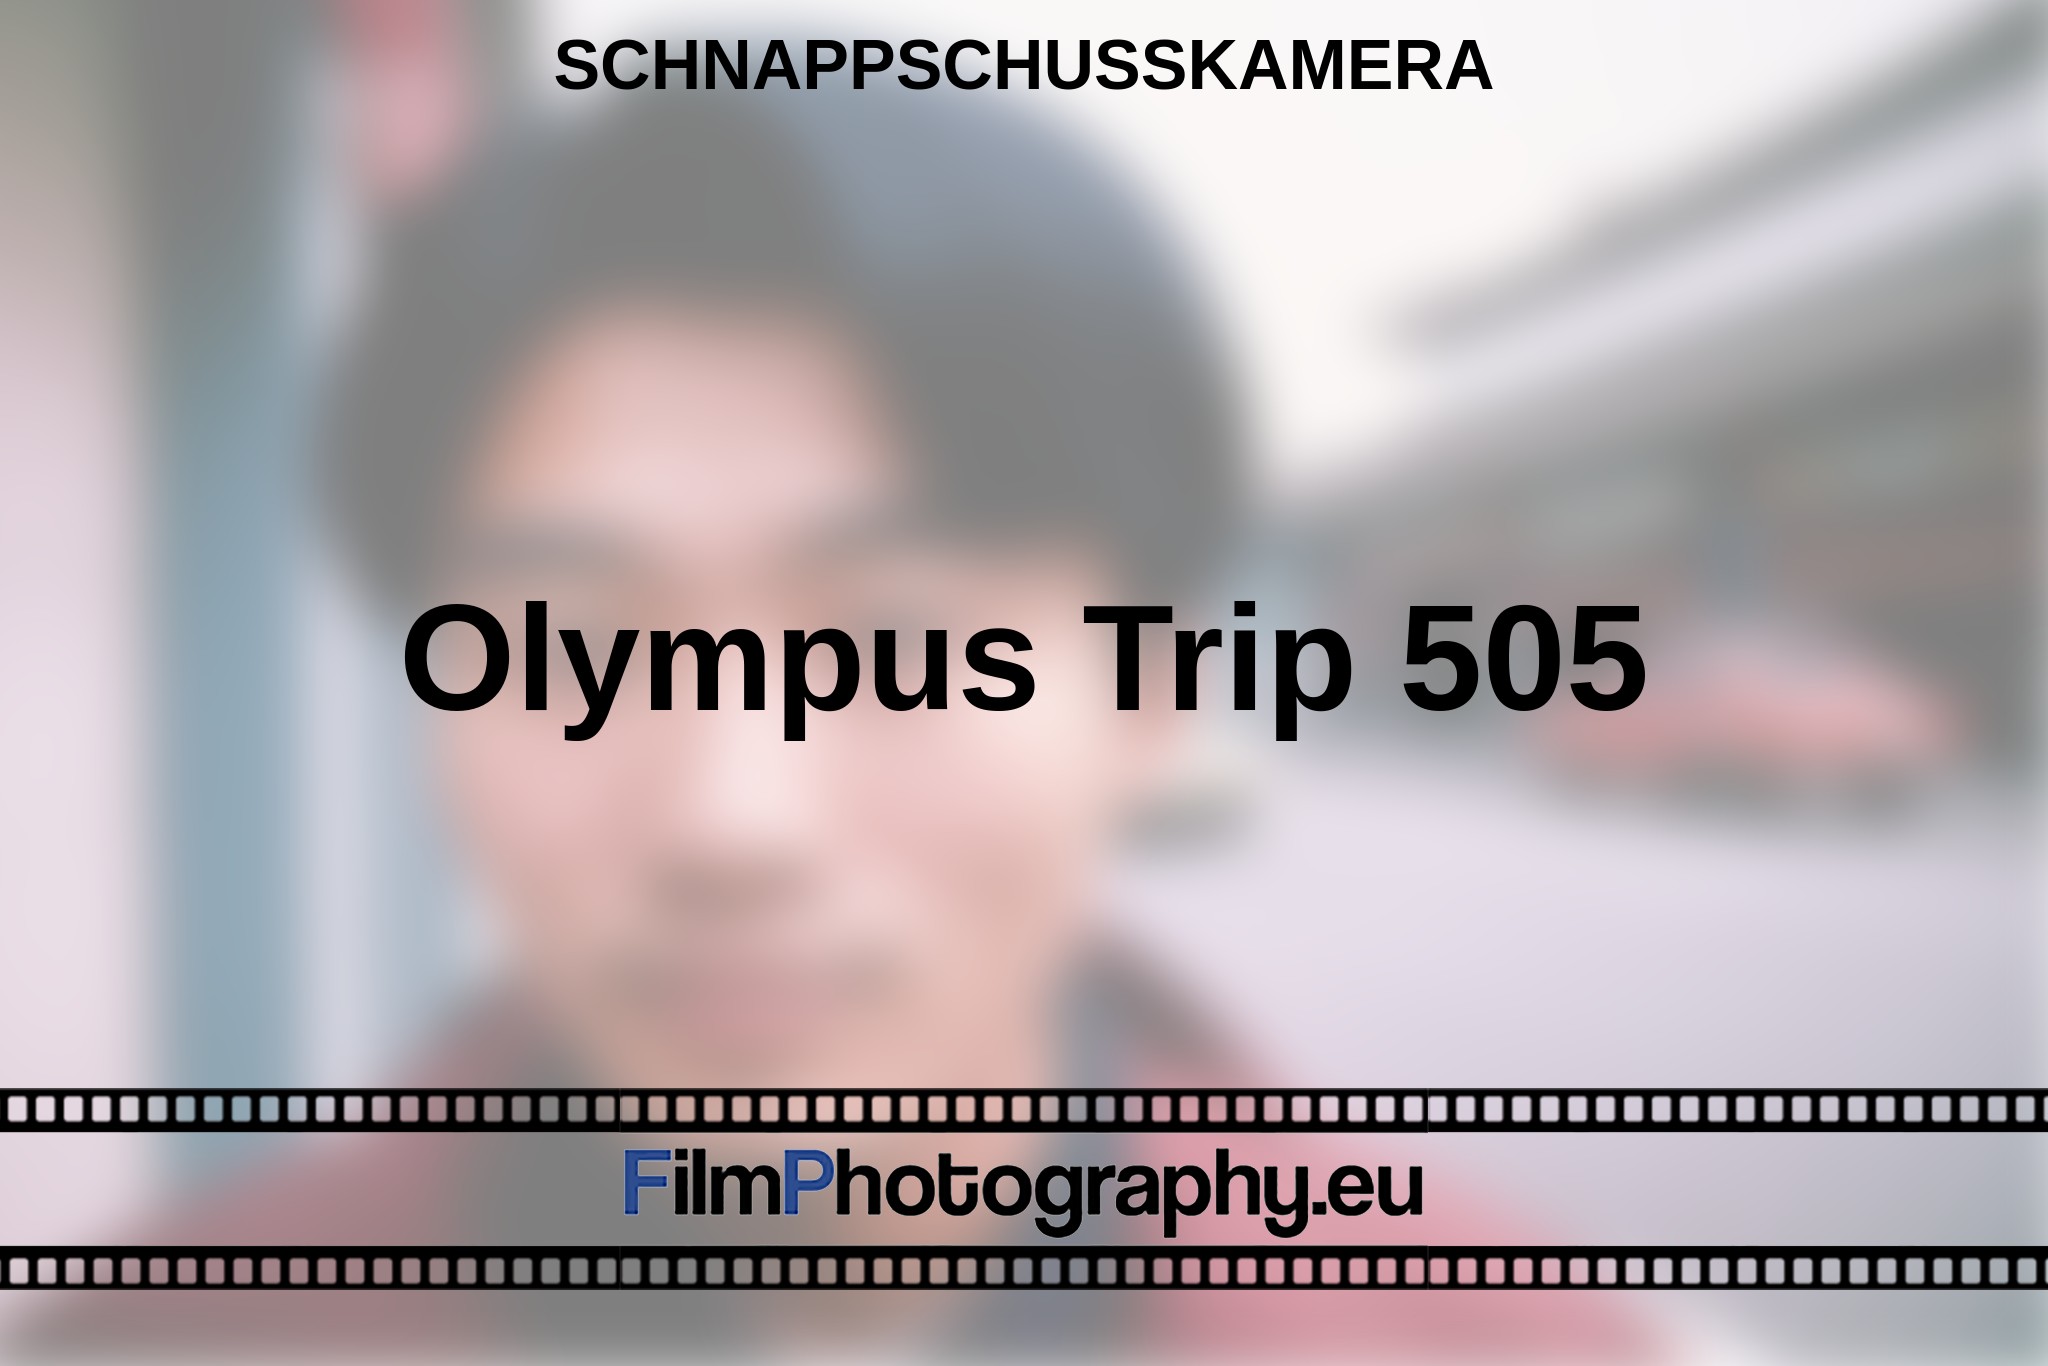 olympus-trip-505-schnappschusskamera-bnv.jpg